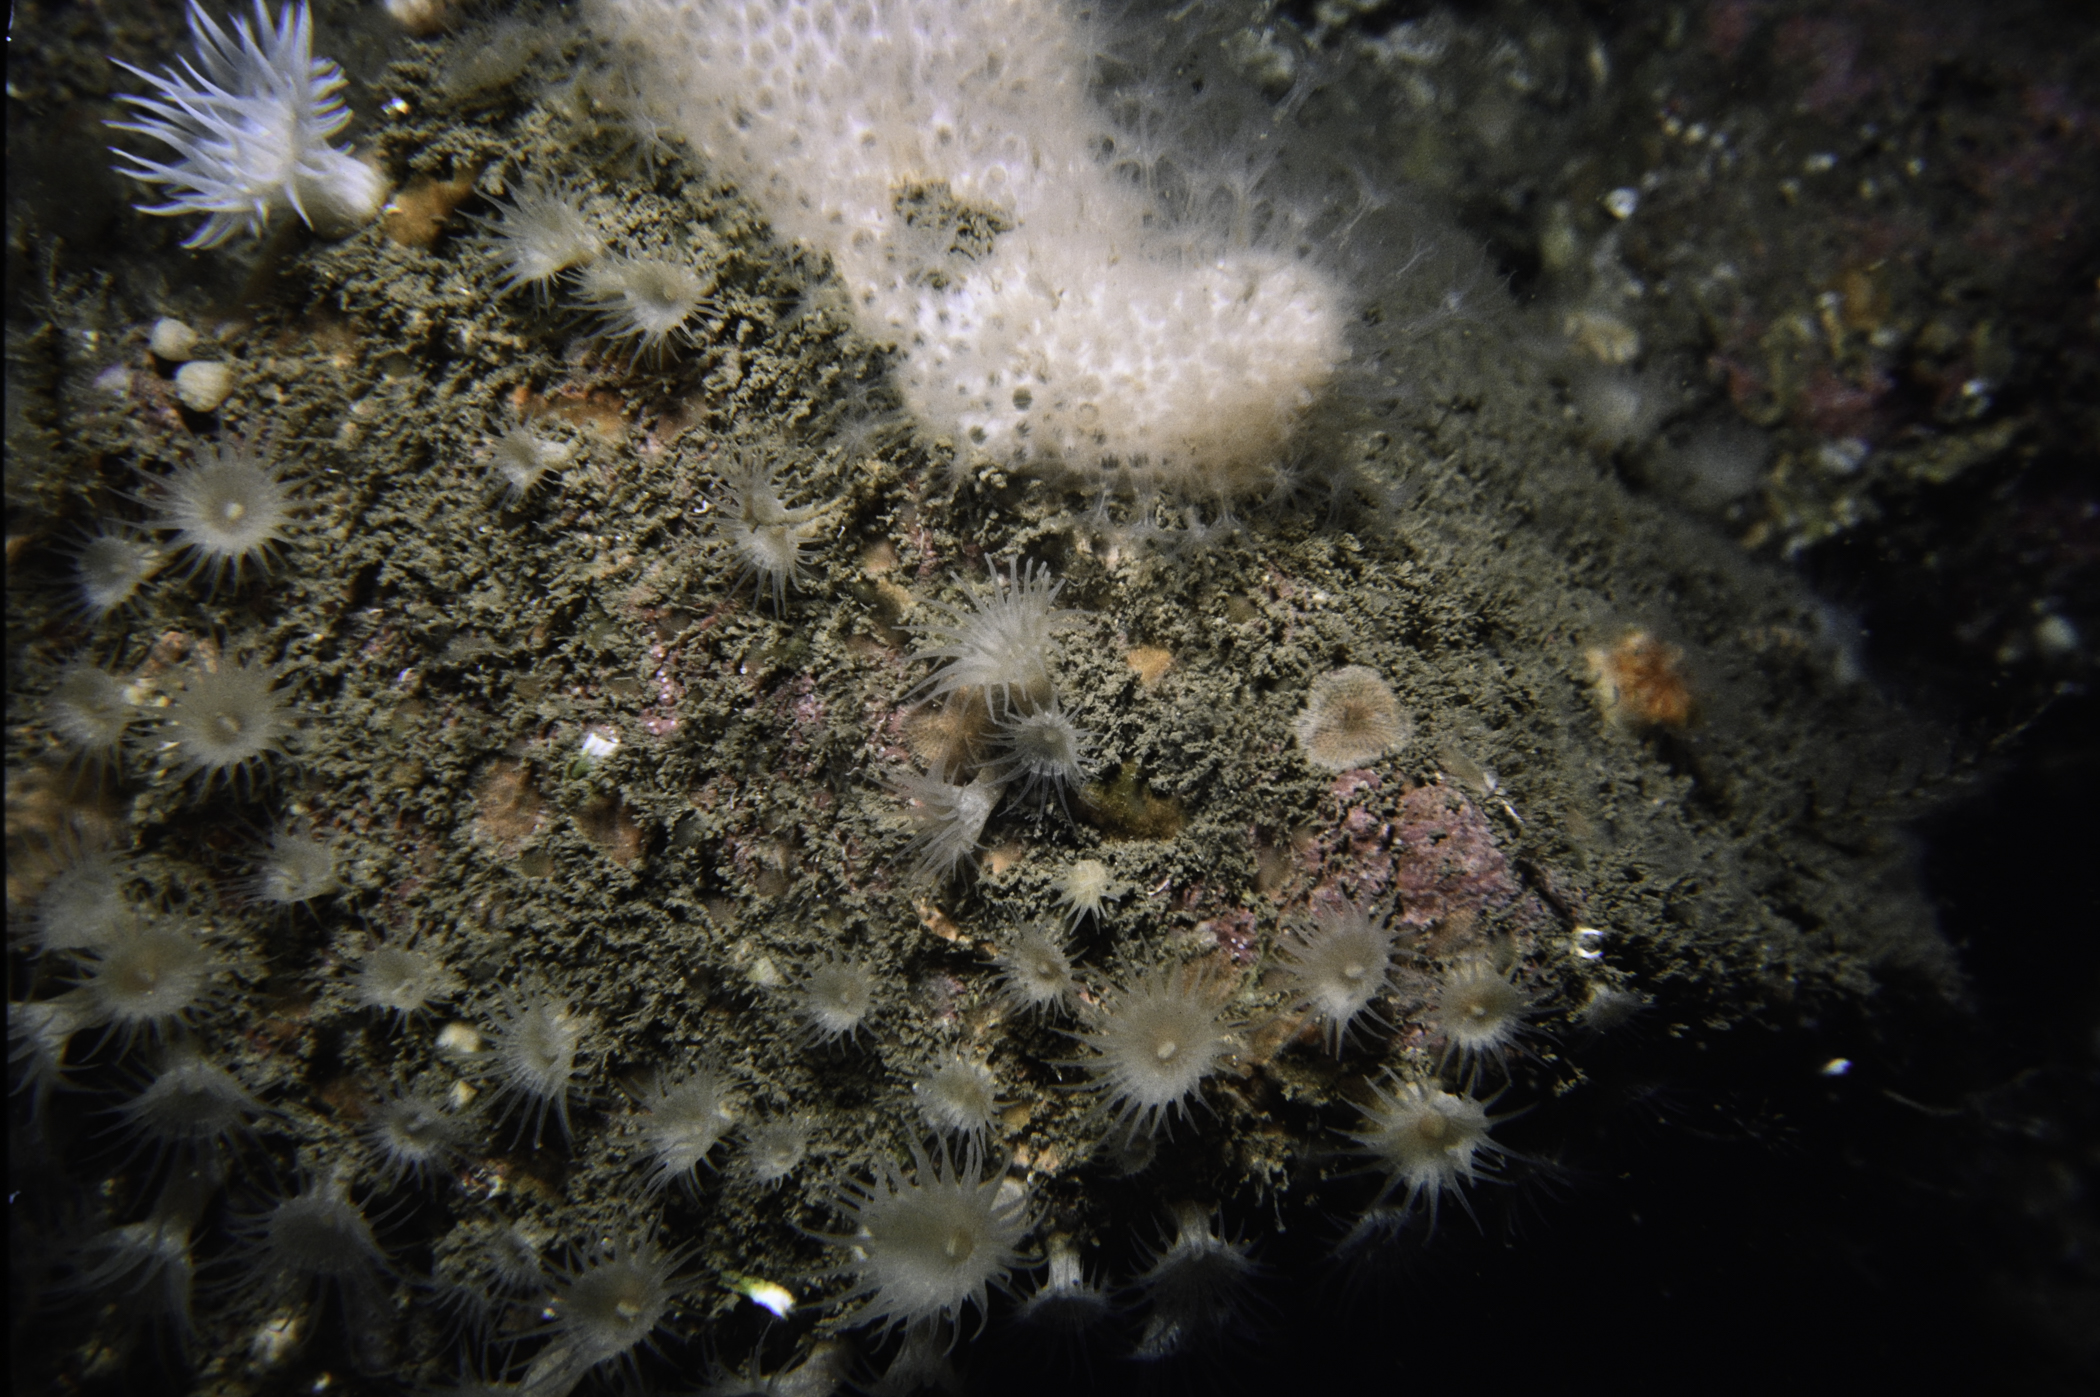 Parazoanthus anguicomus. Site: SE Altacarry Head, Rathlin Island. 